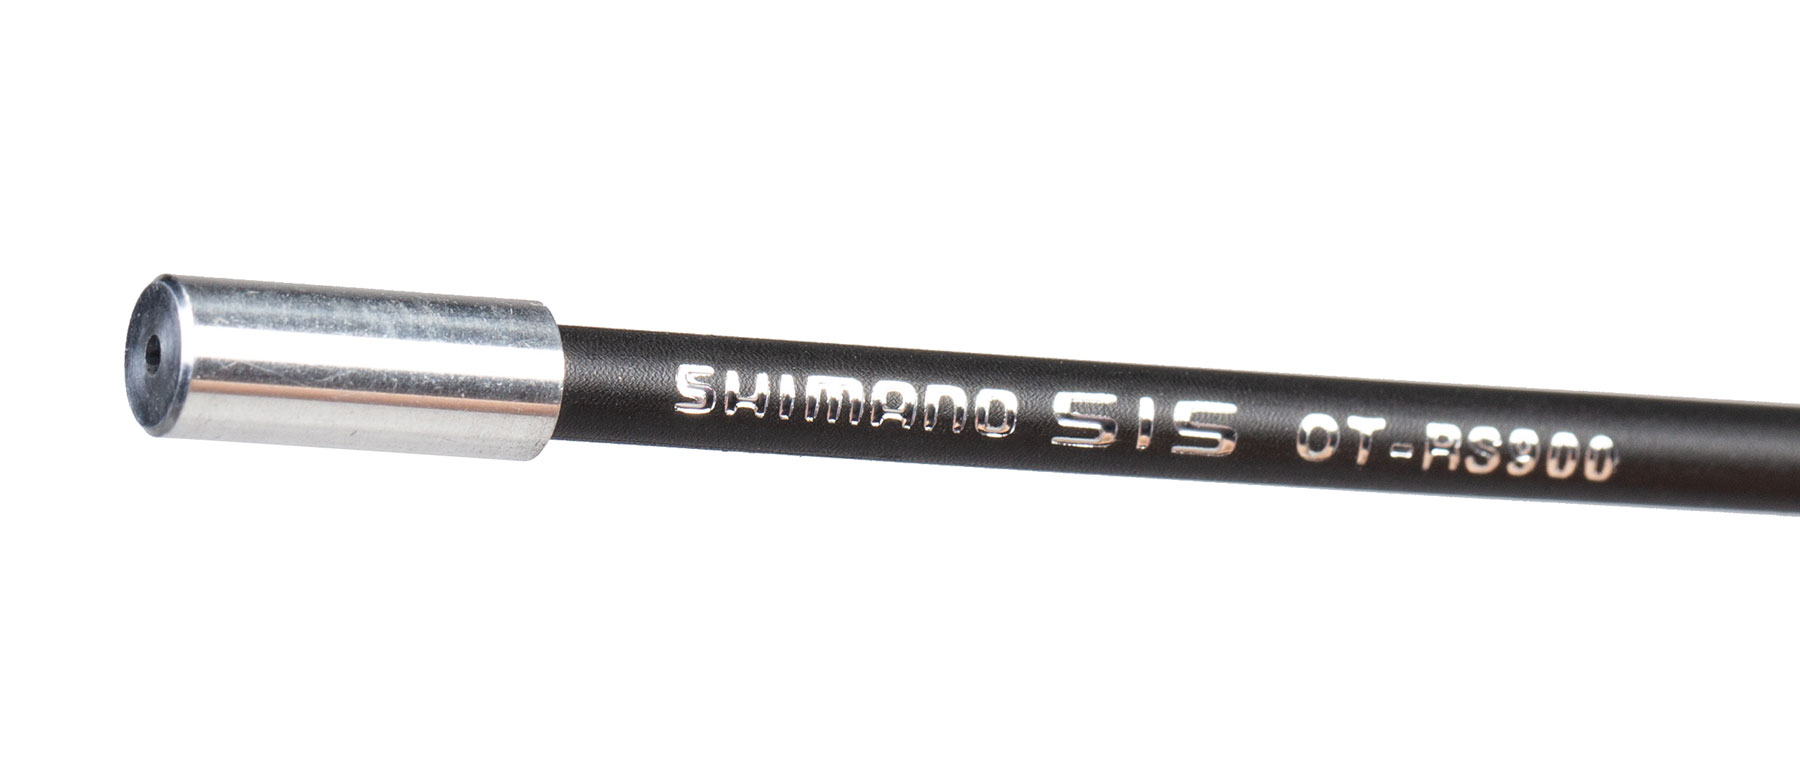 Shimano OT-RS900 Rear Derailleur Shift Cable Housing